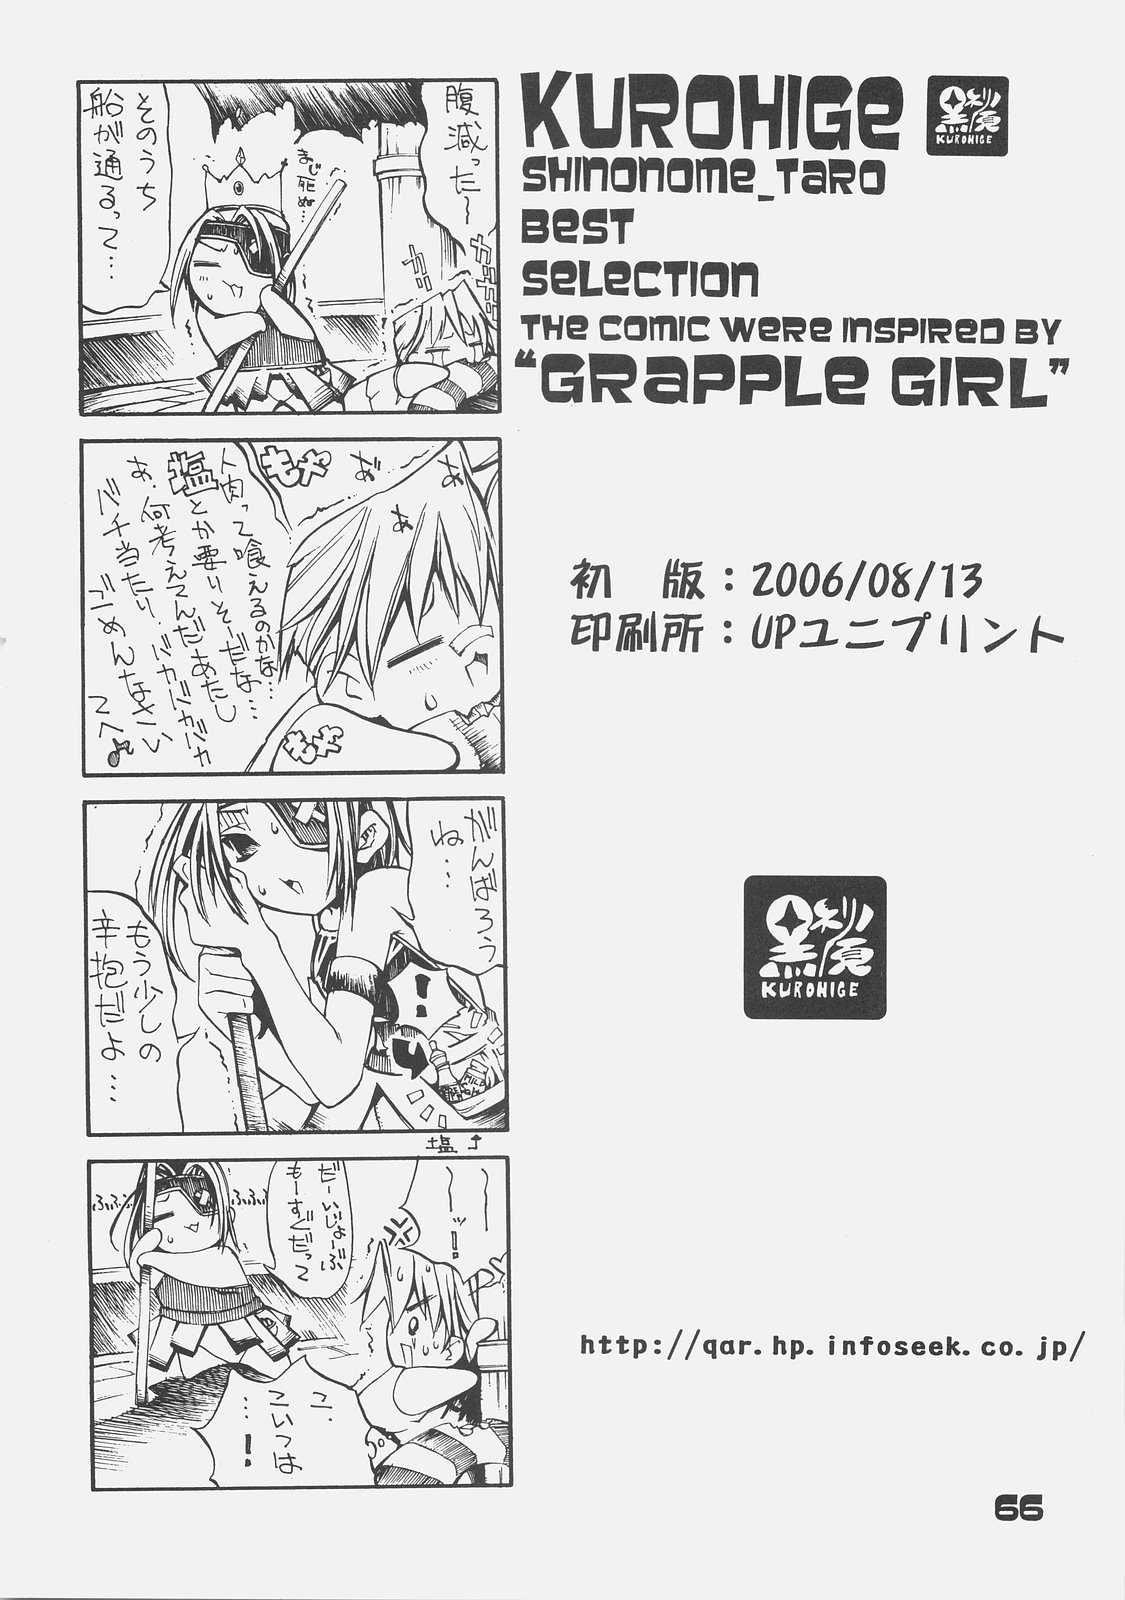 [kuro hige] KUROHIGE SHINONOME TARO BEST SELECTION GRAPPLE GIRL (GGXX) 